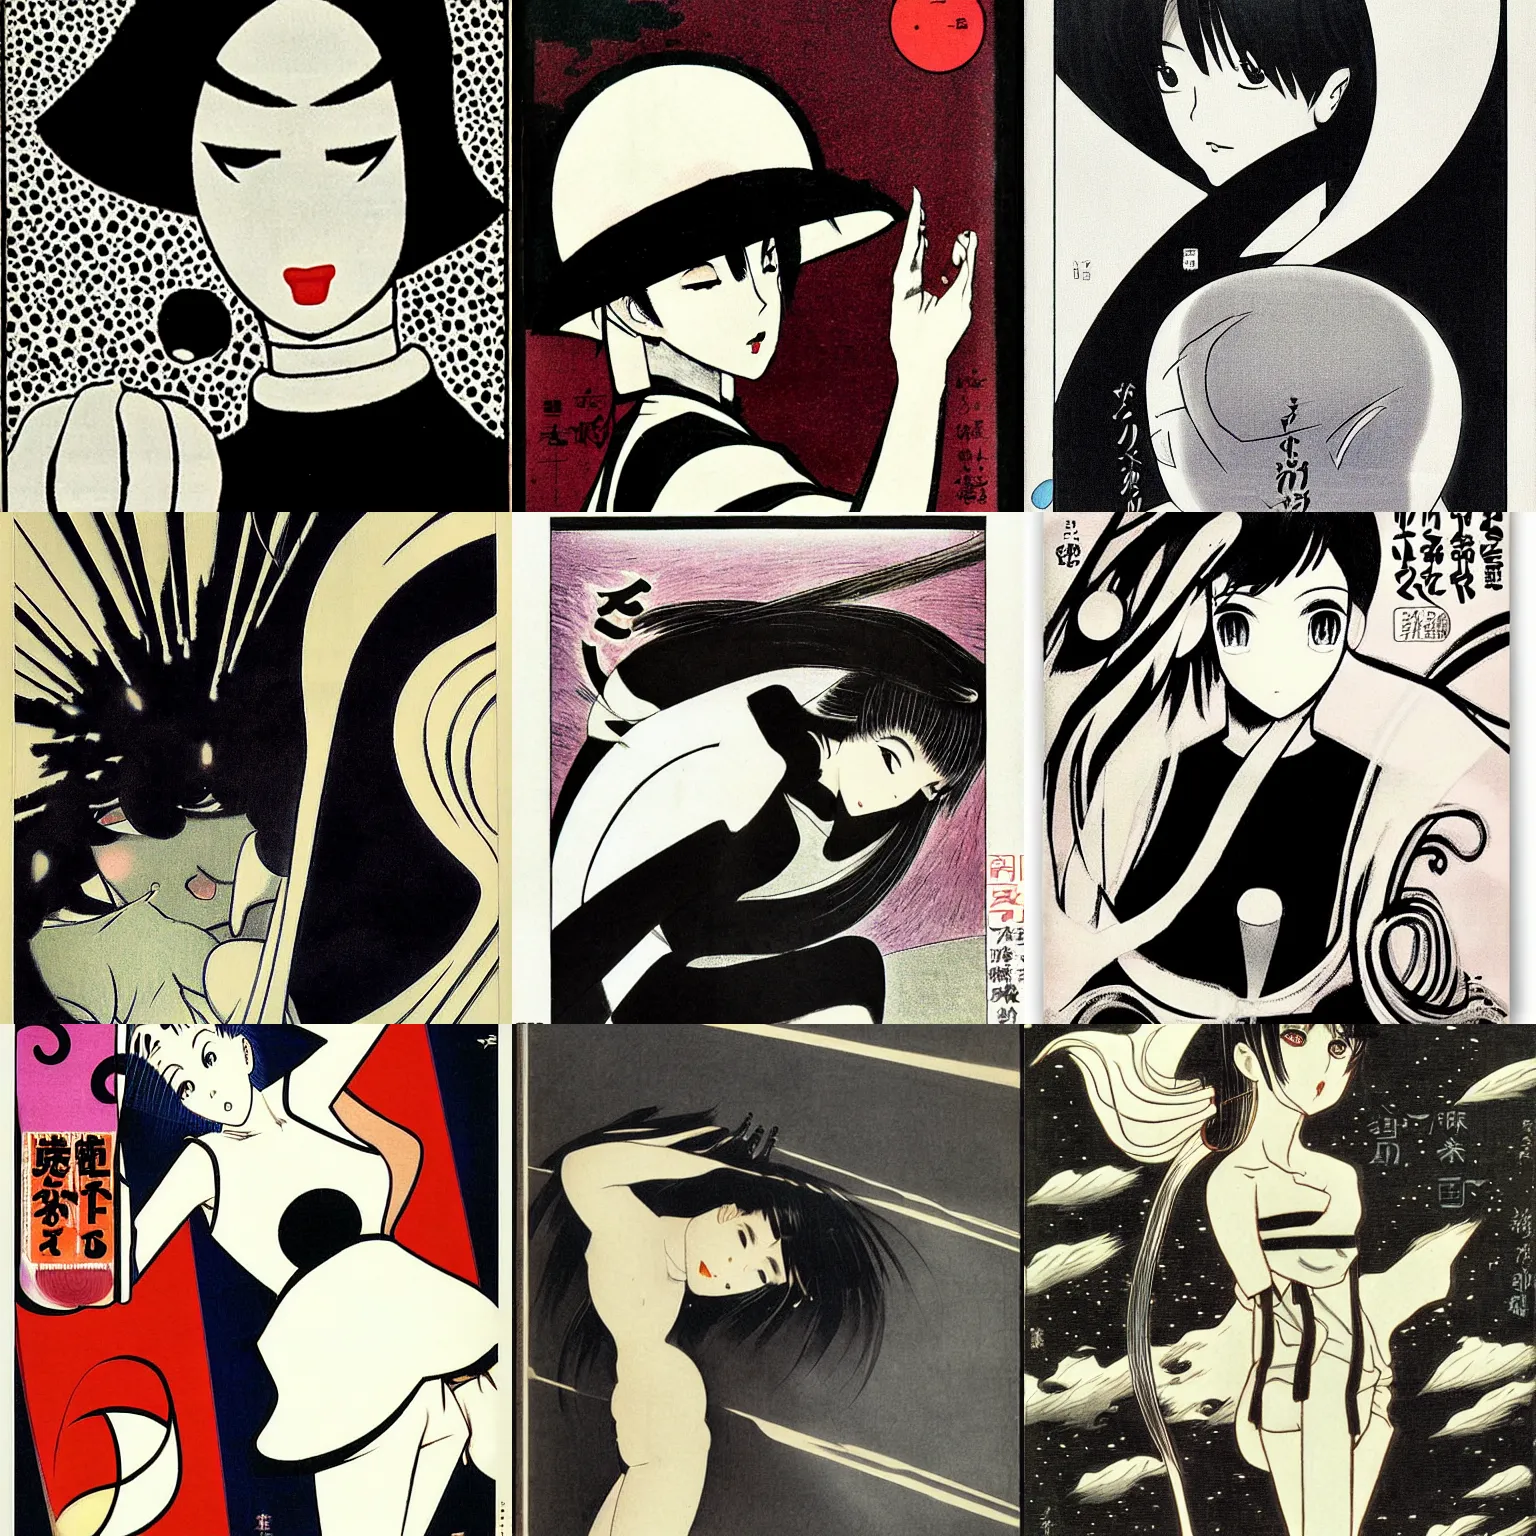 Prompt: white and black manga cover dream by ueshiba riichi, ( sakura kinomoto ), mysterious x, italian futurism